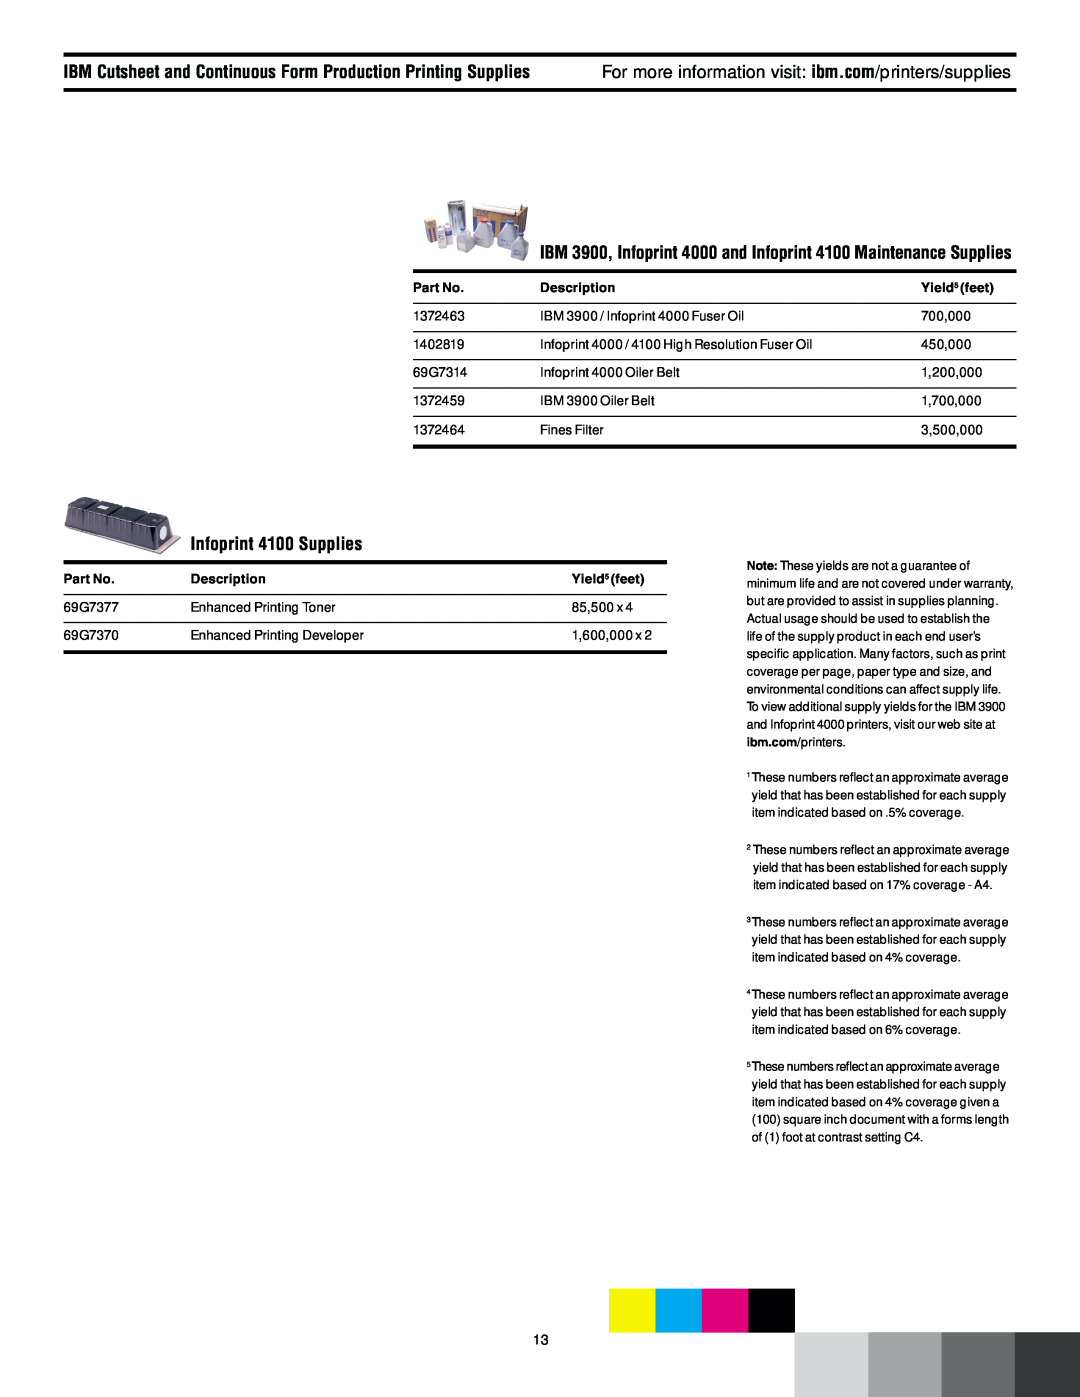 IBM 6400 manual Infoprint 4100 Supplies, IBM 3900, Infoprint 4000 and Infoprint 4100 Maintenance Supplies 